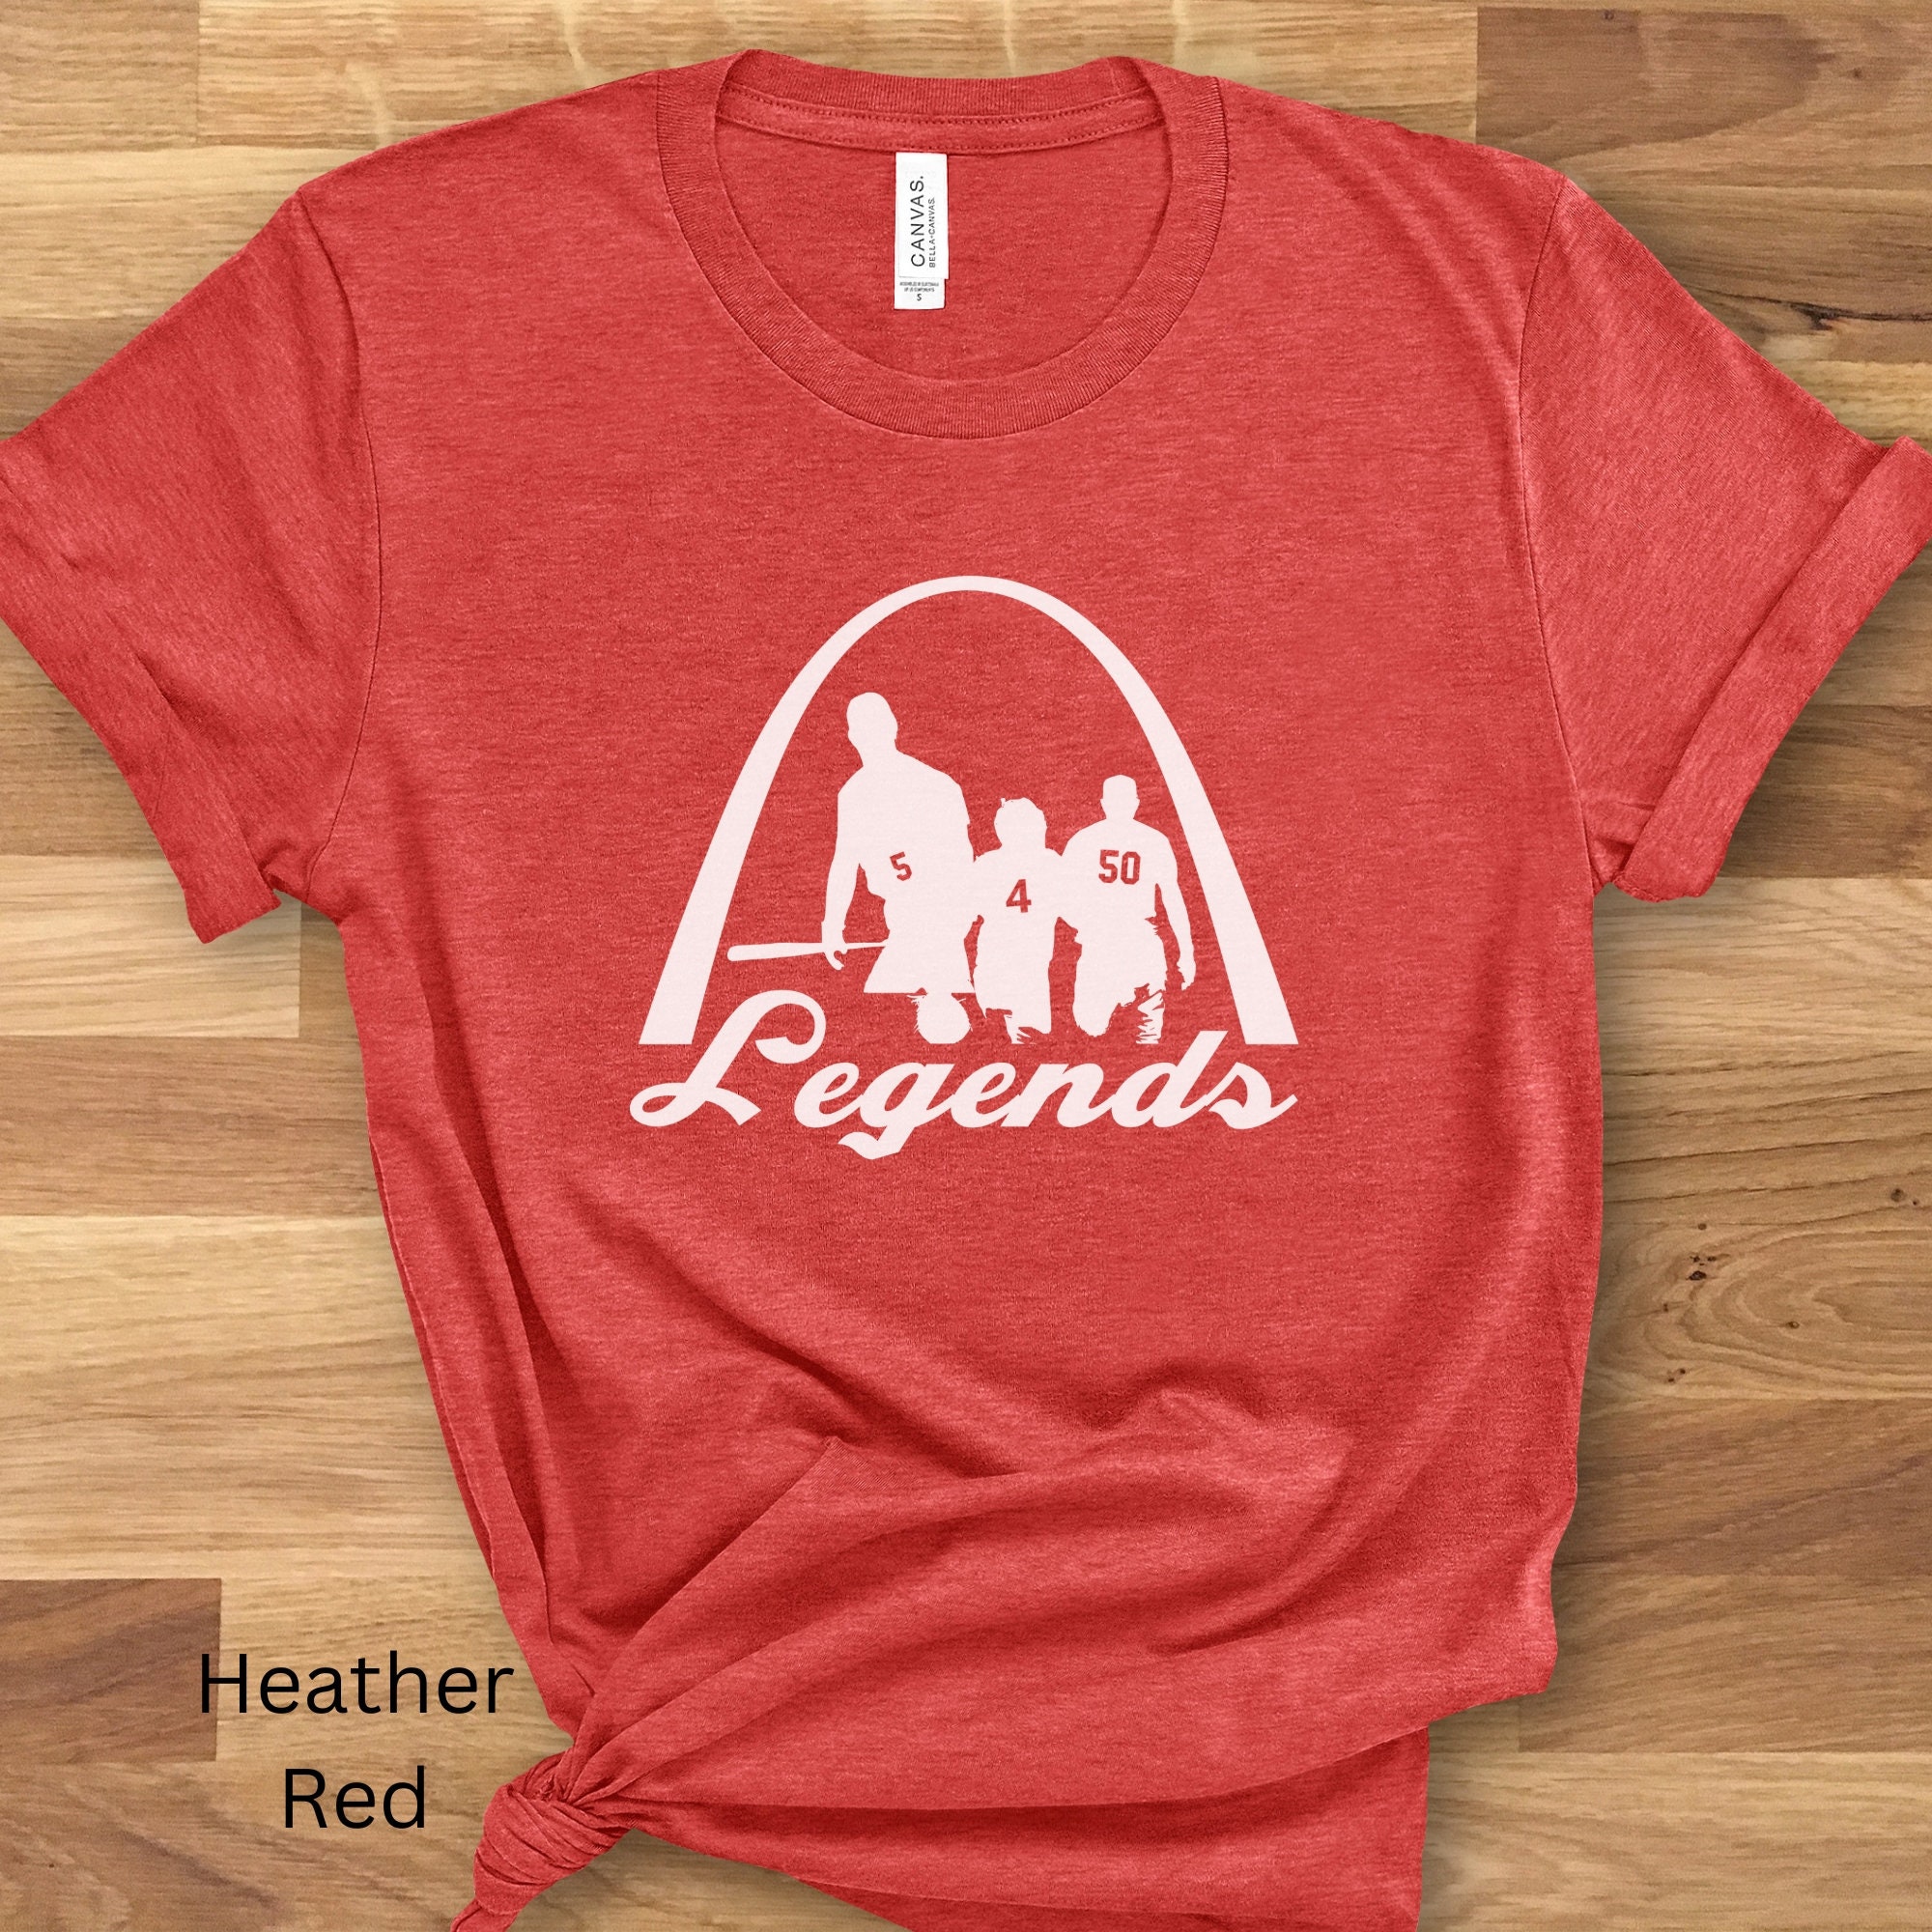 Cardinals Legends T-shirt Pujols Yadi Molina Wainwright 